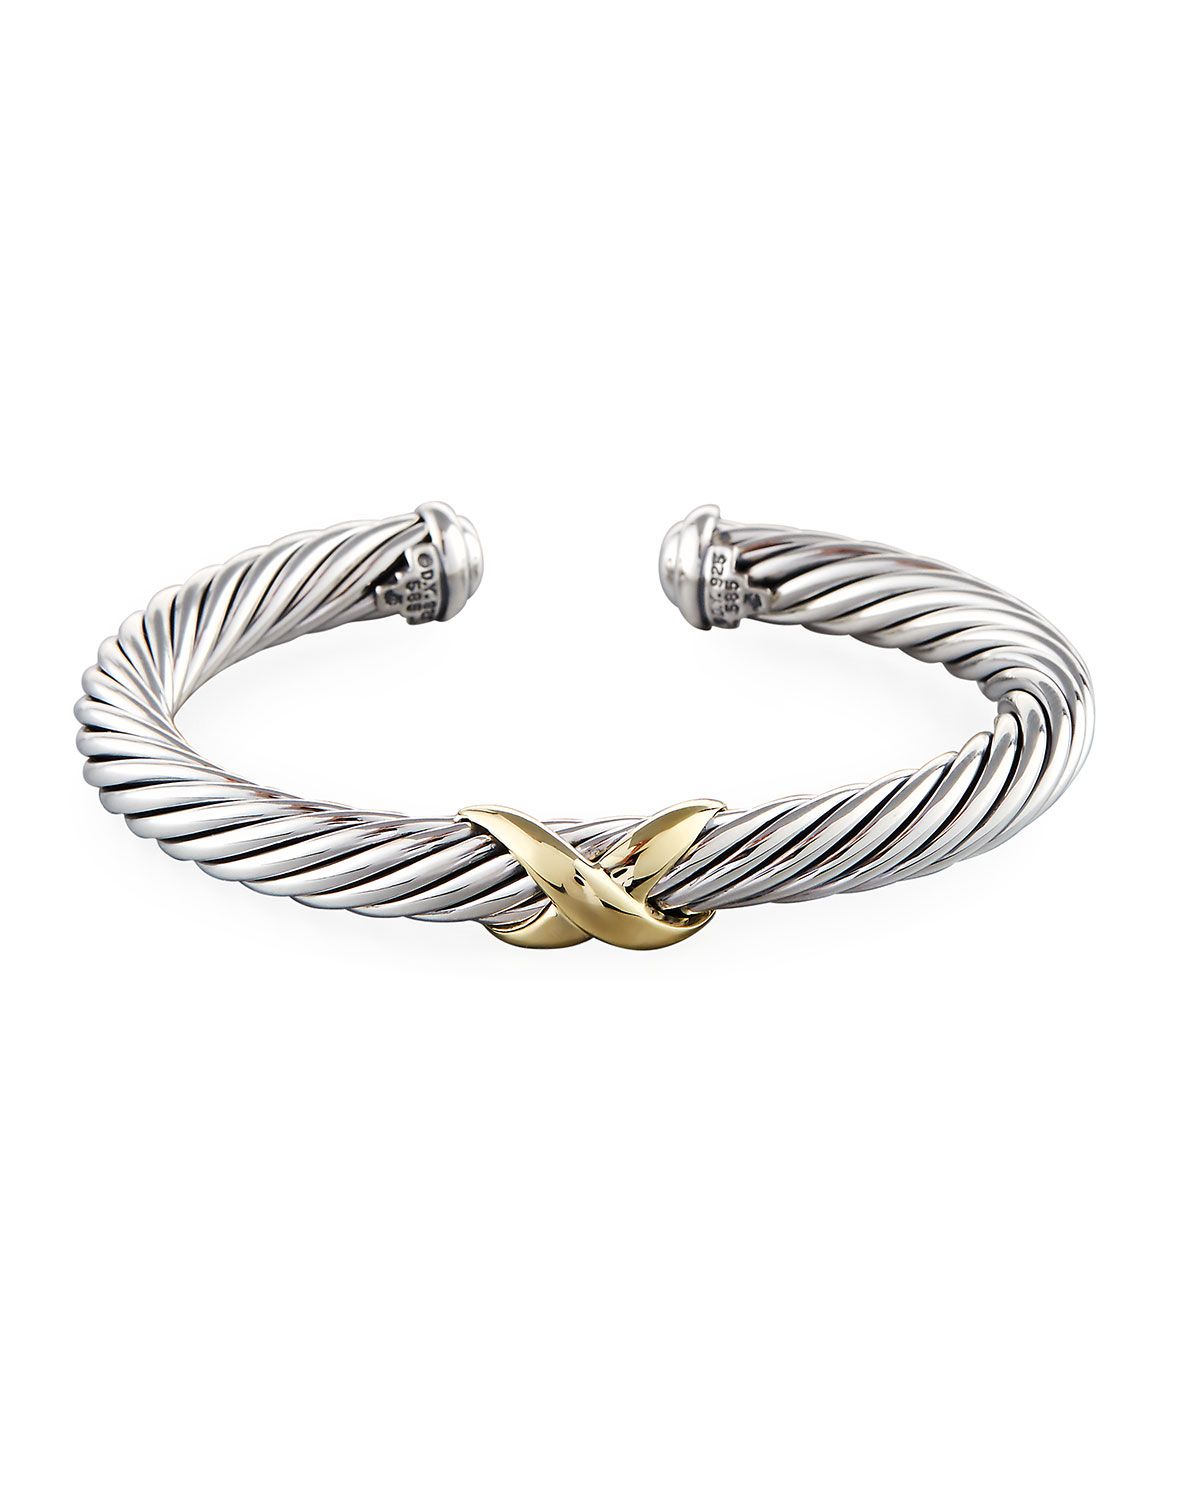 X Bracelet with Gold | Neiman Marcus